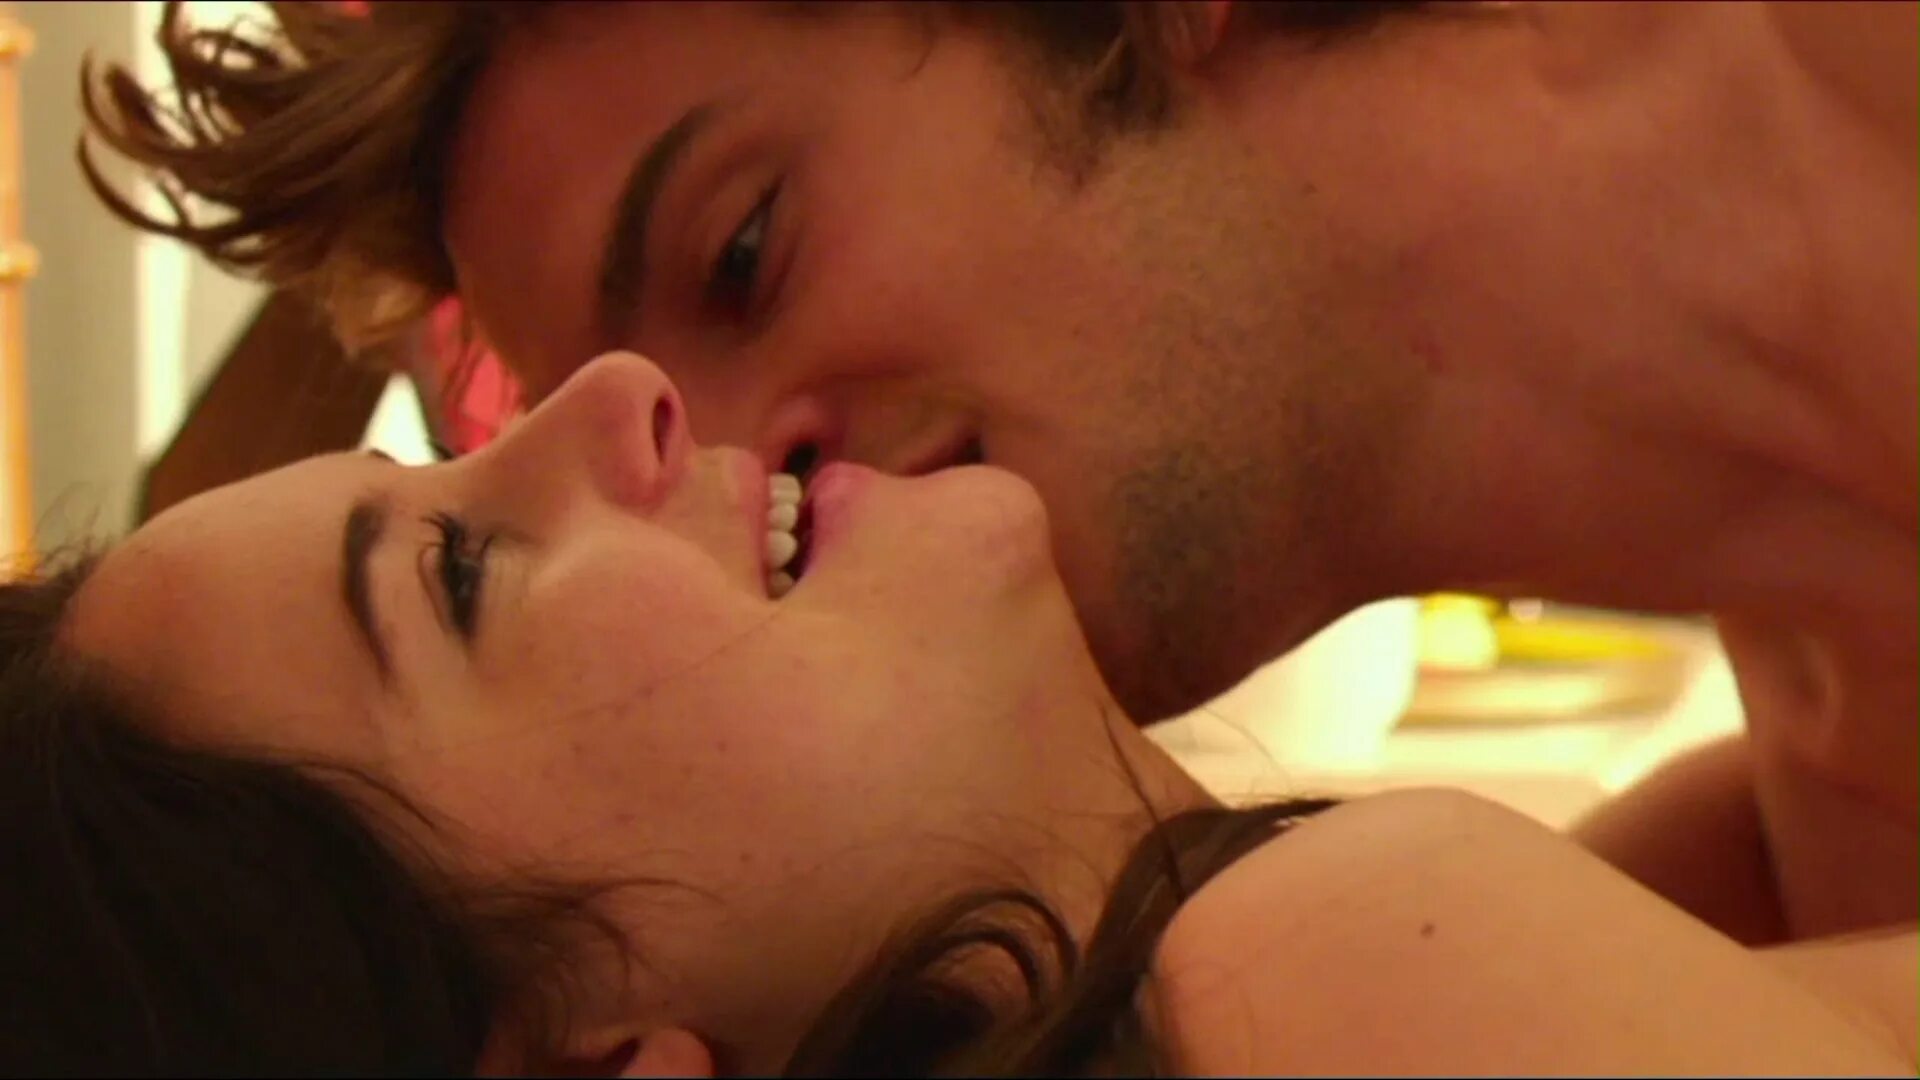 Hottest scene video. Woodley Shailene постельная сцена. Шейлин Вудли горячие сцены.